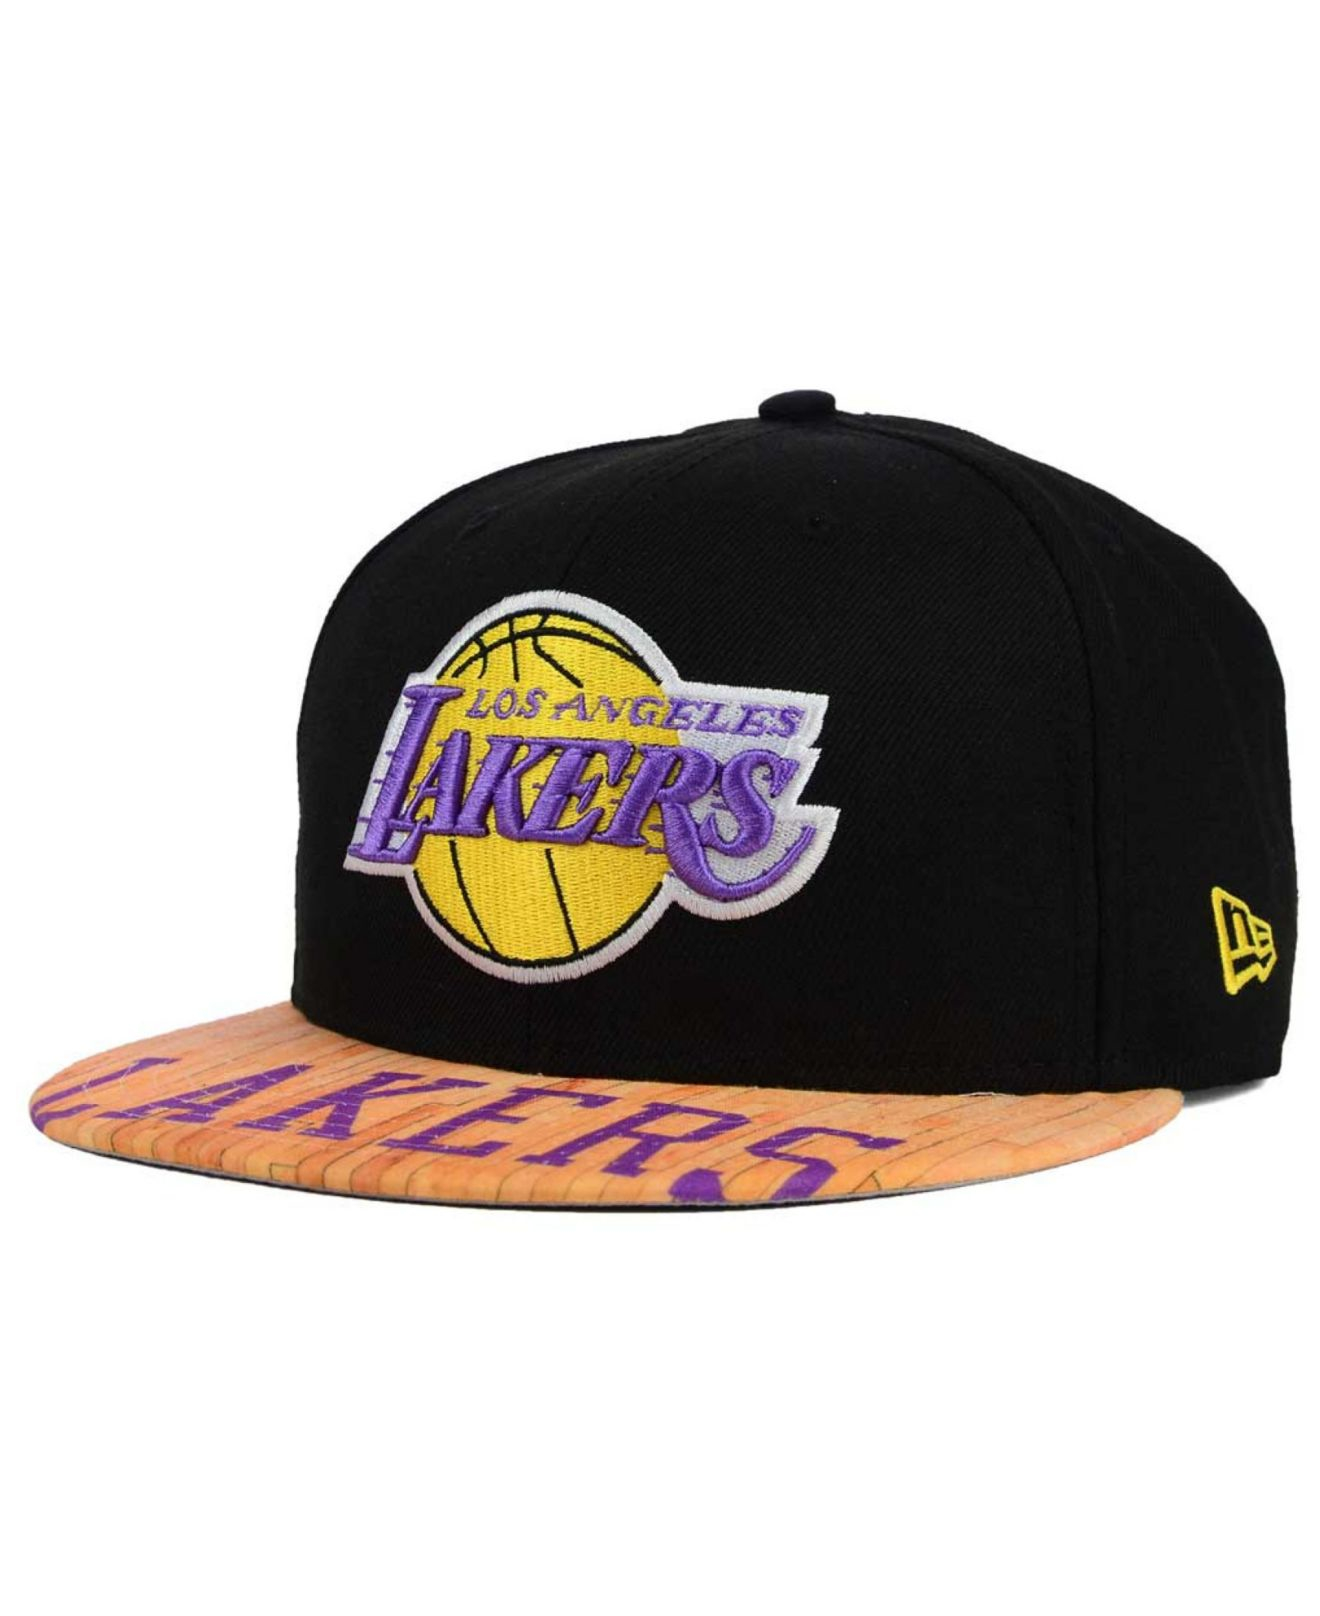 Lyst - Ktz Los Angeles Lakers Wood Viz 9fifty Snapback Cap in Black for Men